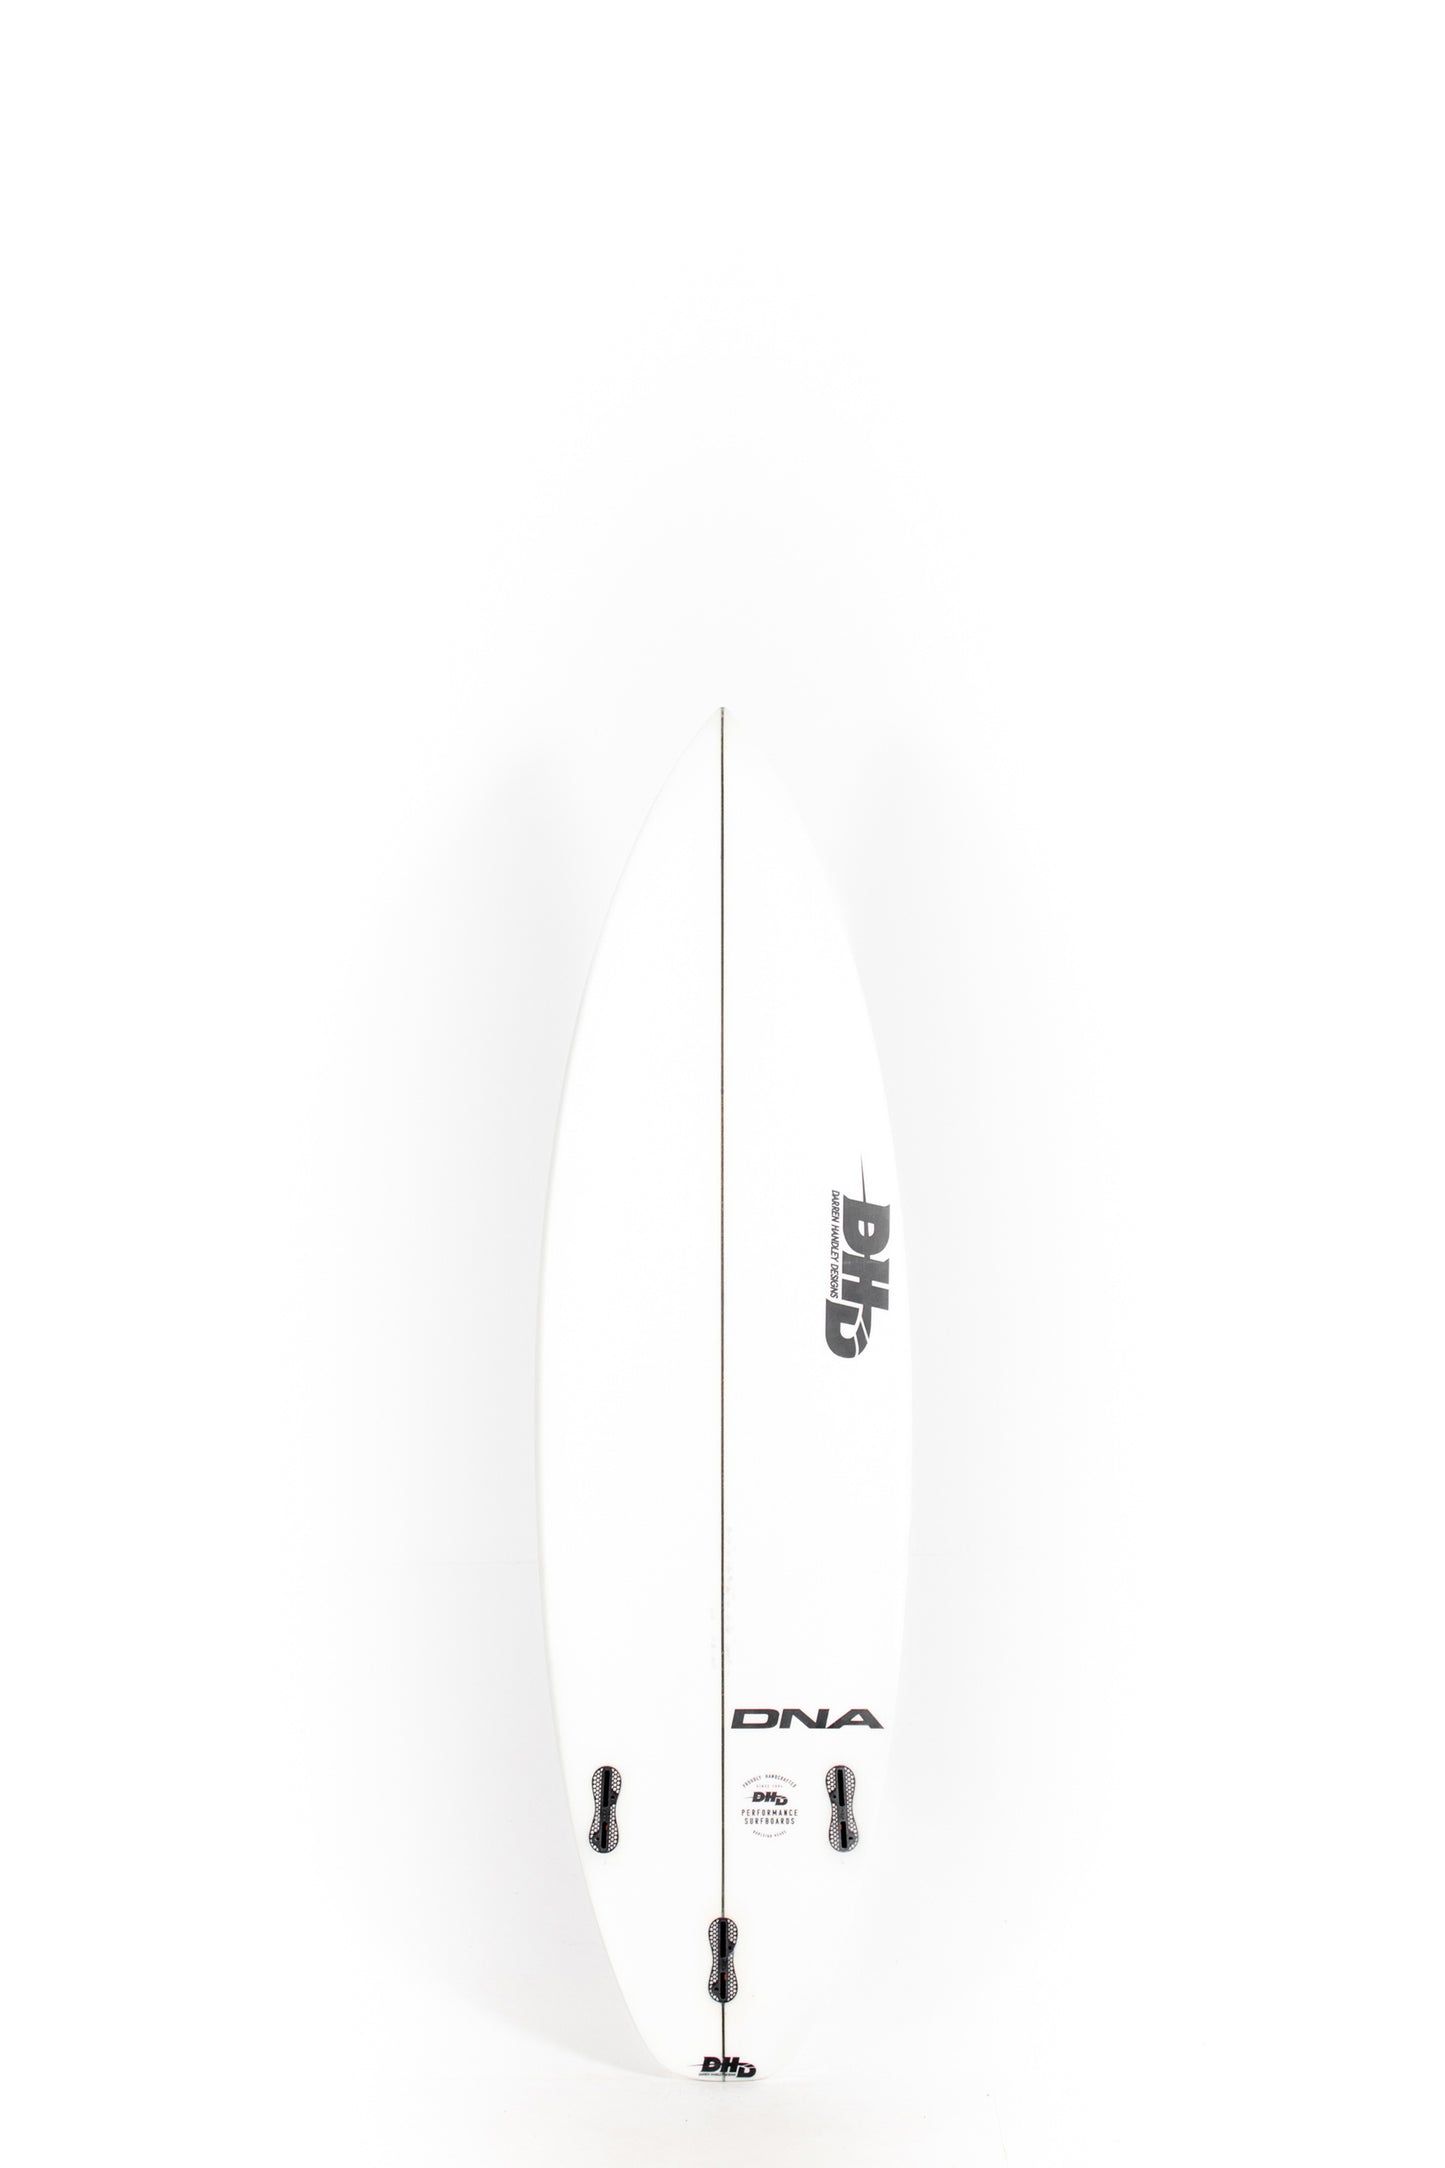 Pukas Surf Shop - DHD - DNA by Darren Handley - 5'10" x 18 5/8 x 2 1/4 x 26L - DHDDNA510